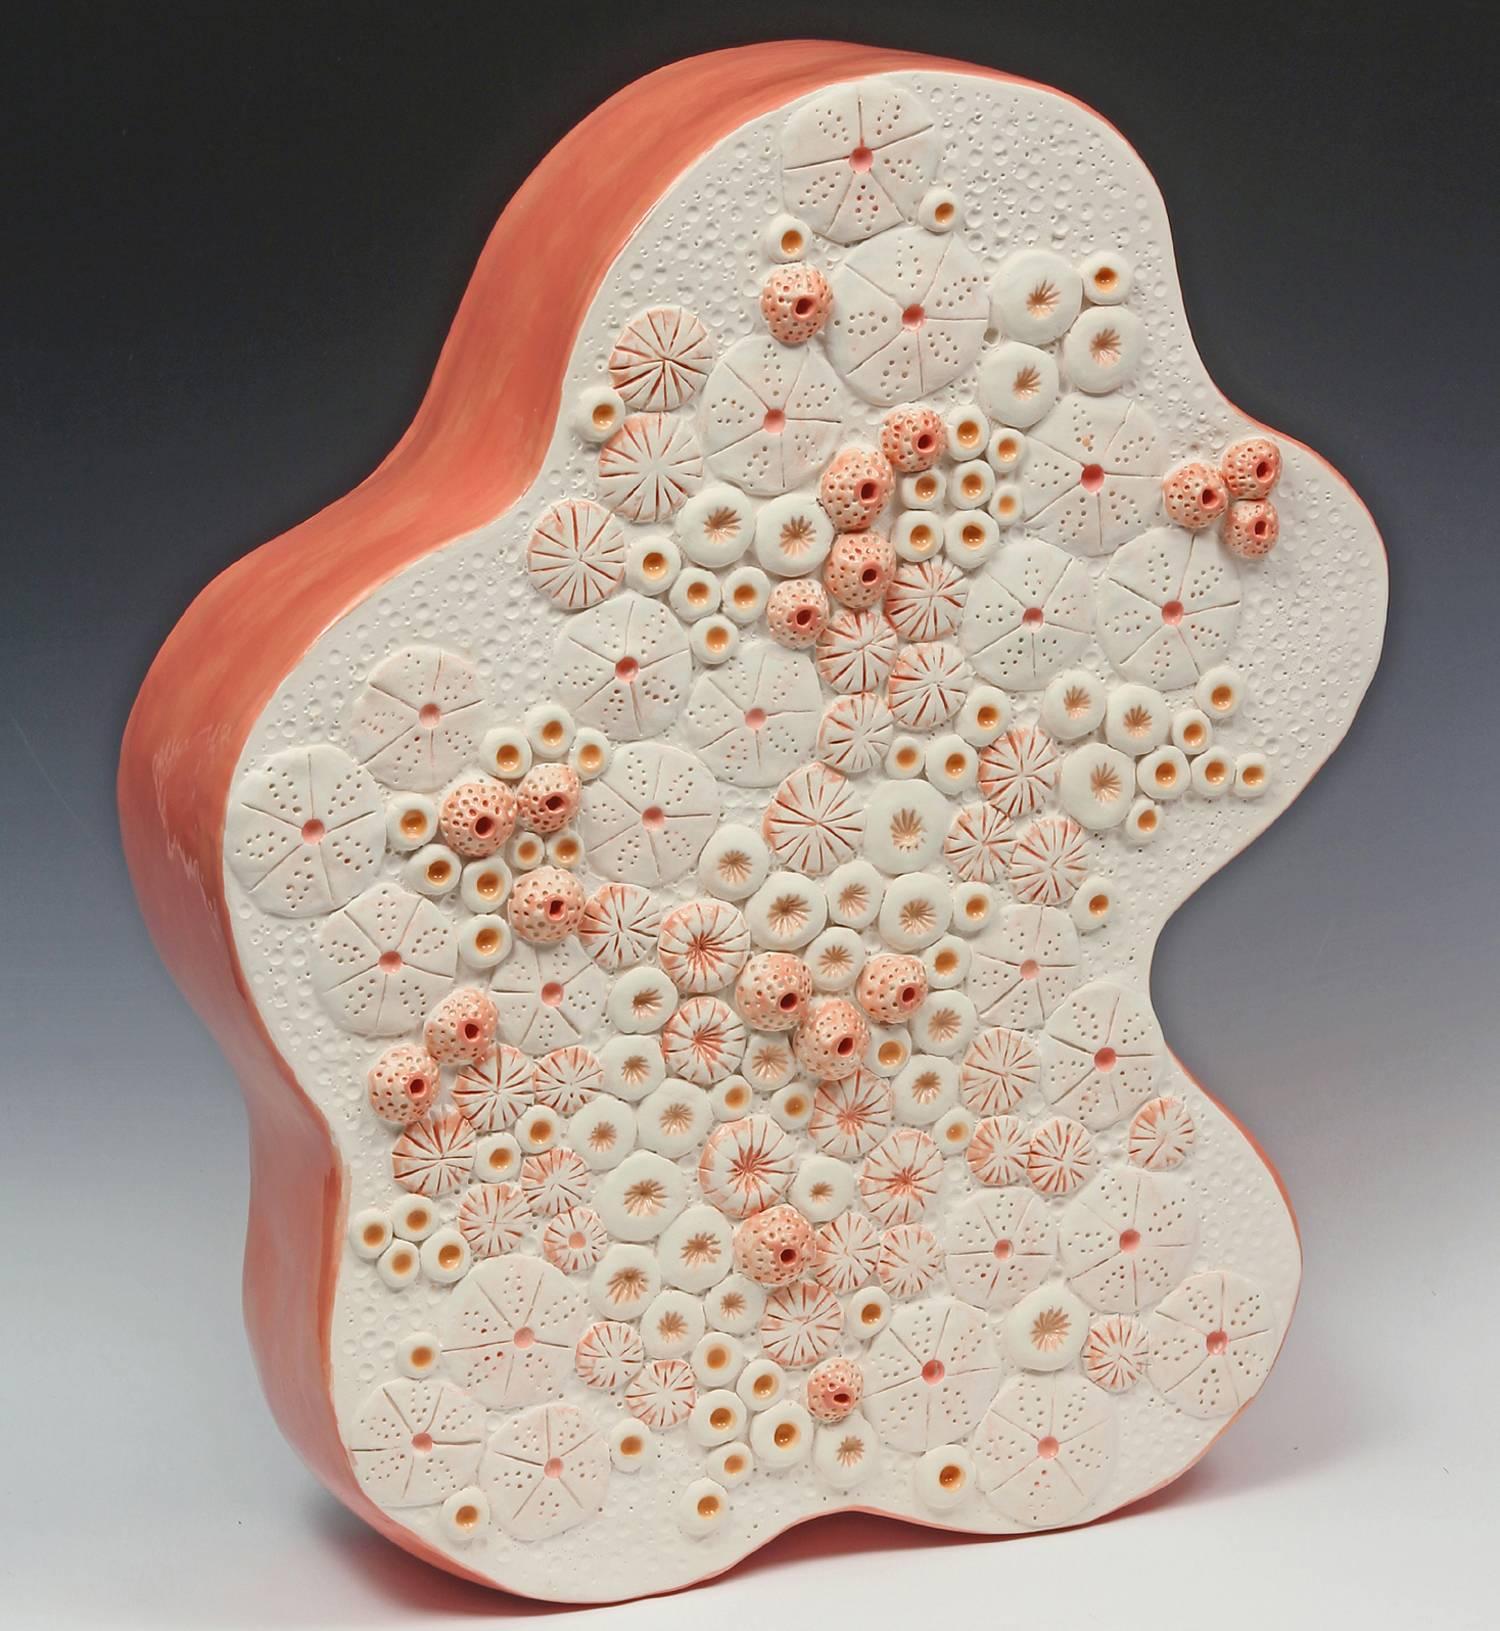 Coral XVIII / coral inspired ceramic sculpture